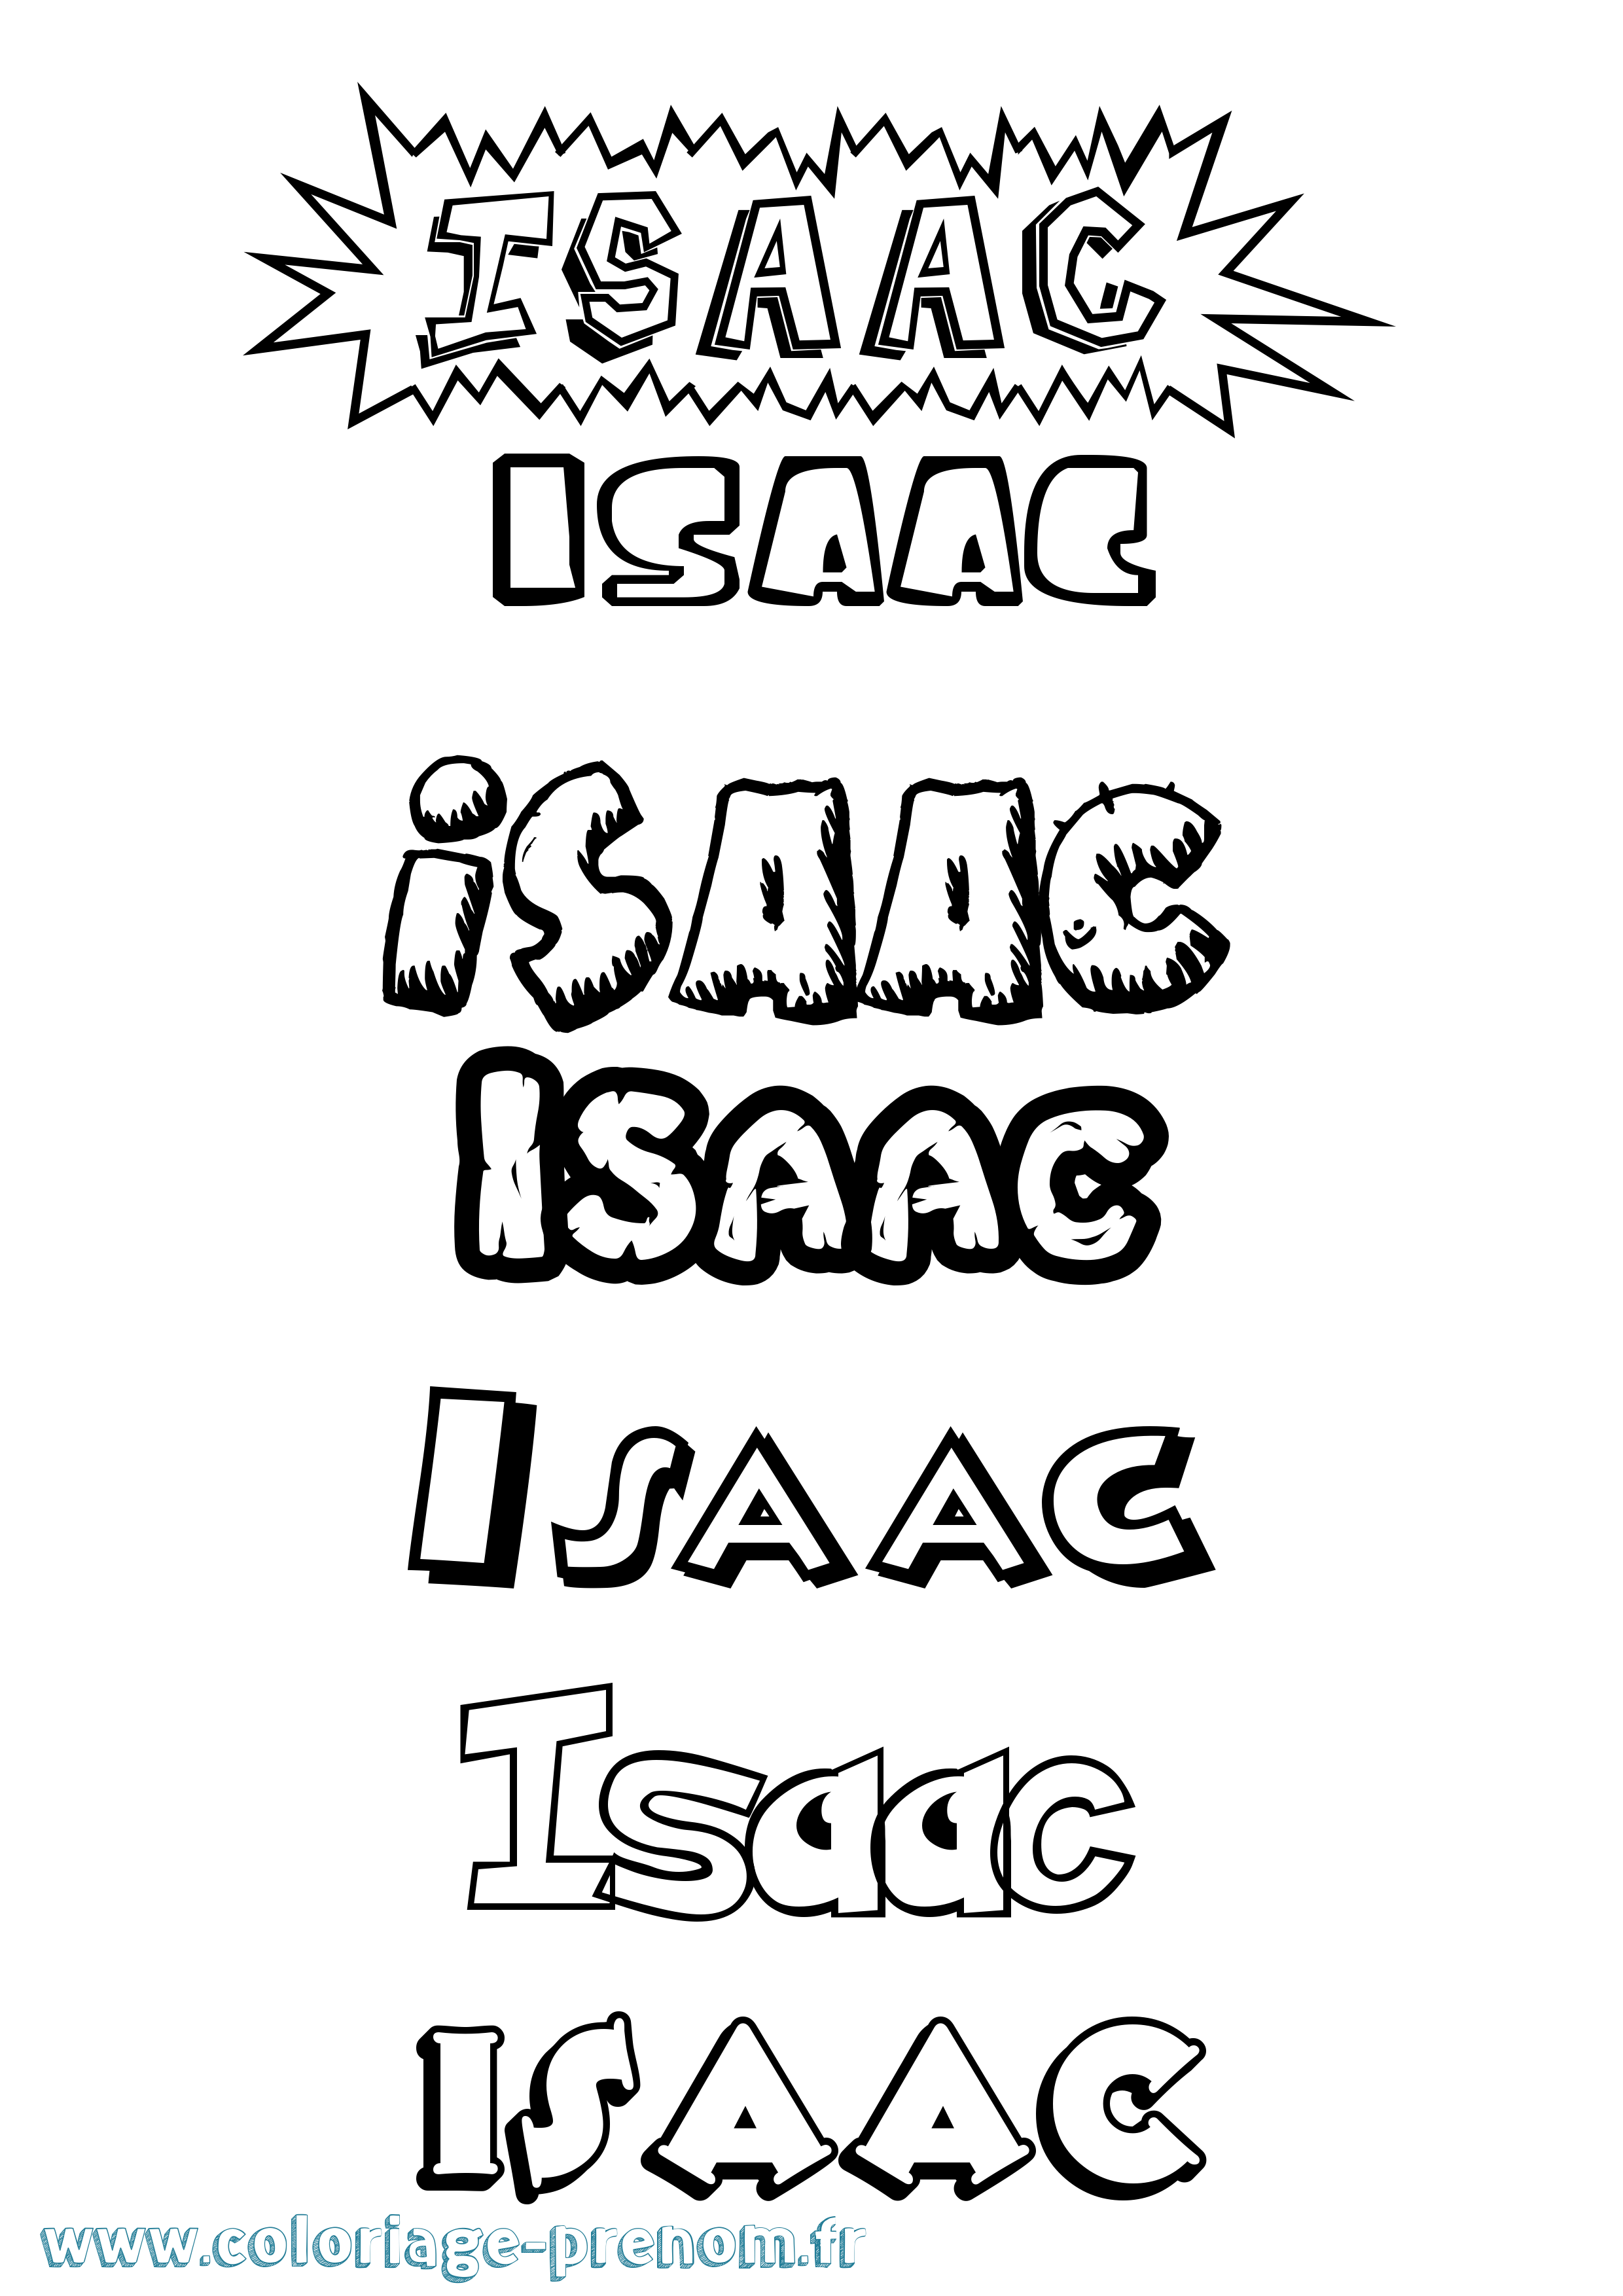 Coloriage prénom Isaac